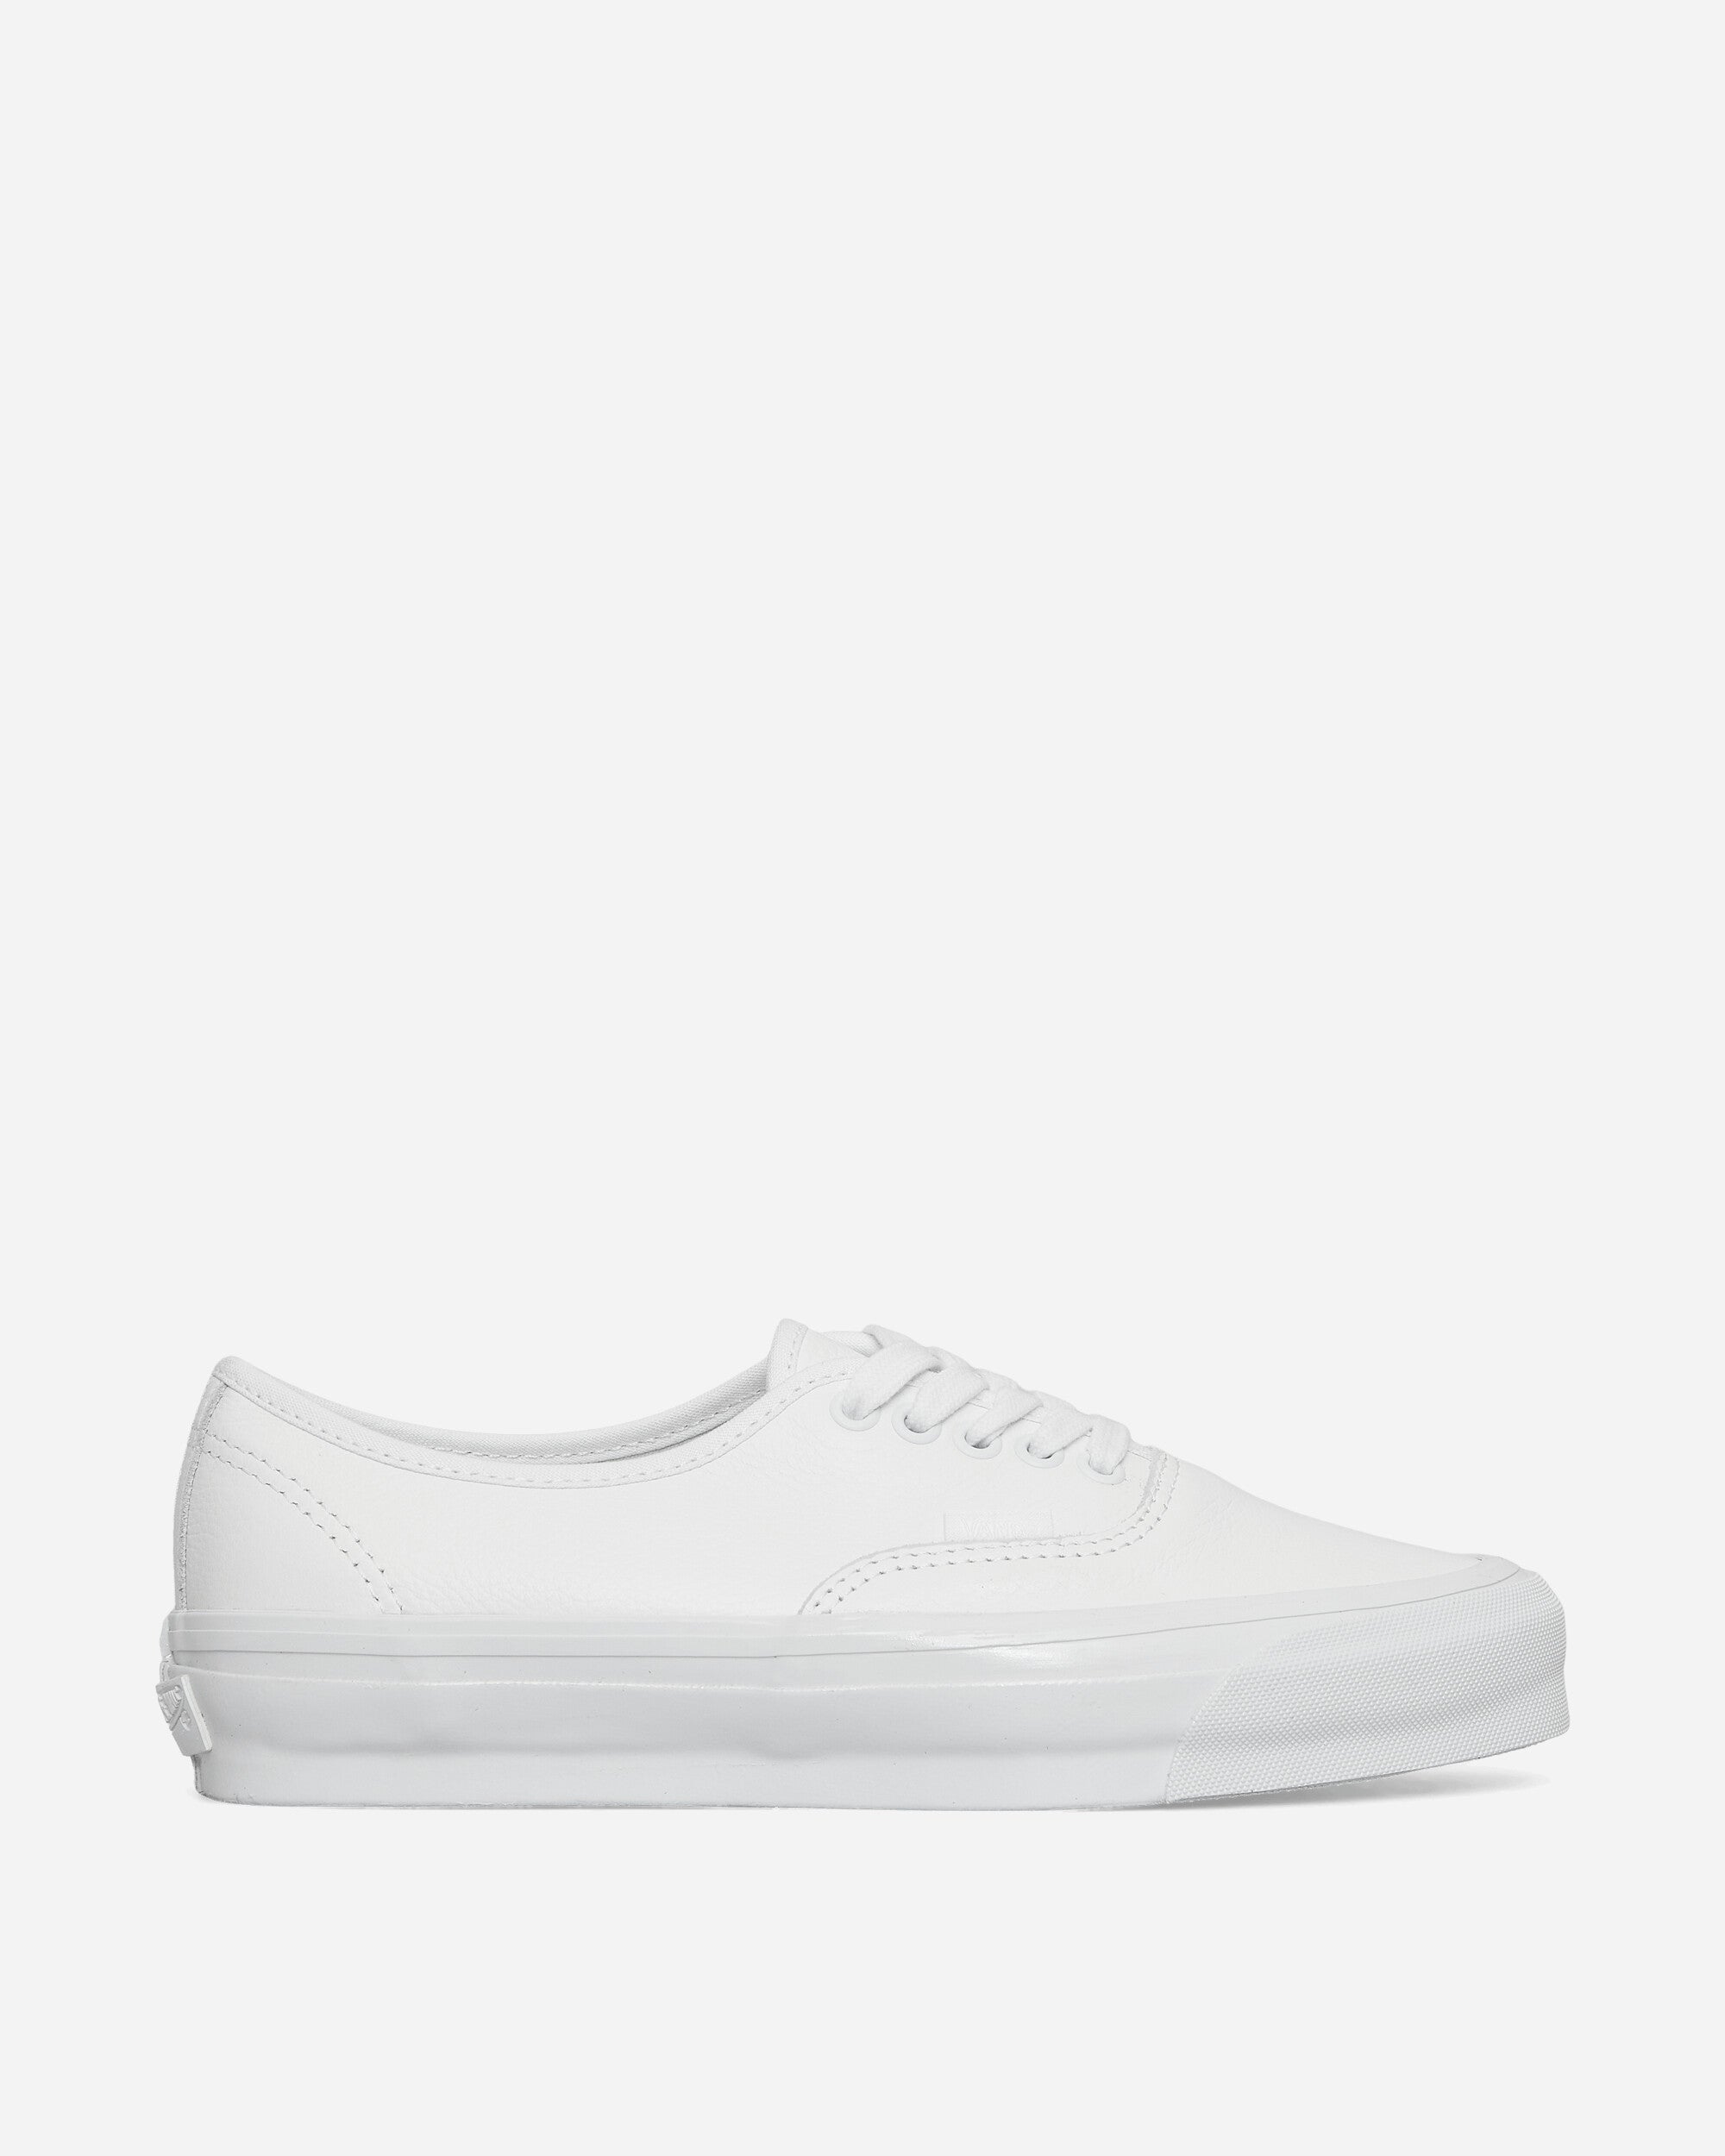 Premium Authentic 44 Leather Sneakers White